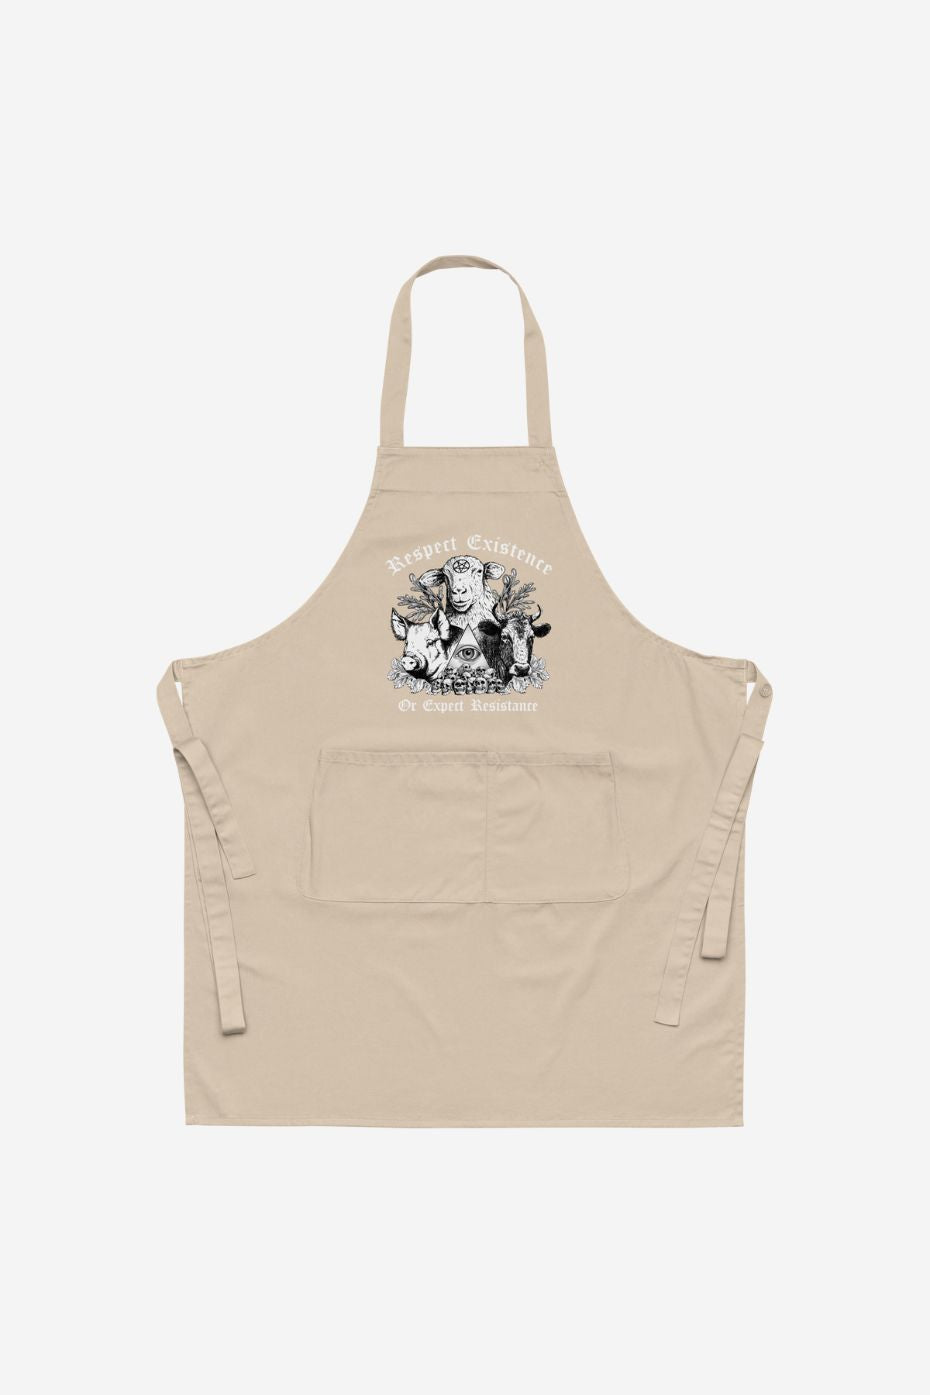 Respect Existence - Organic cotton apron